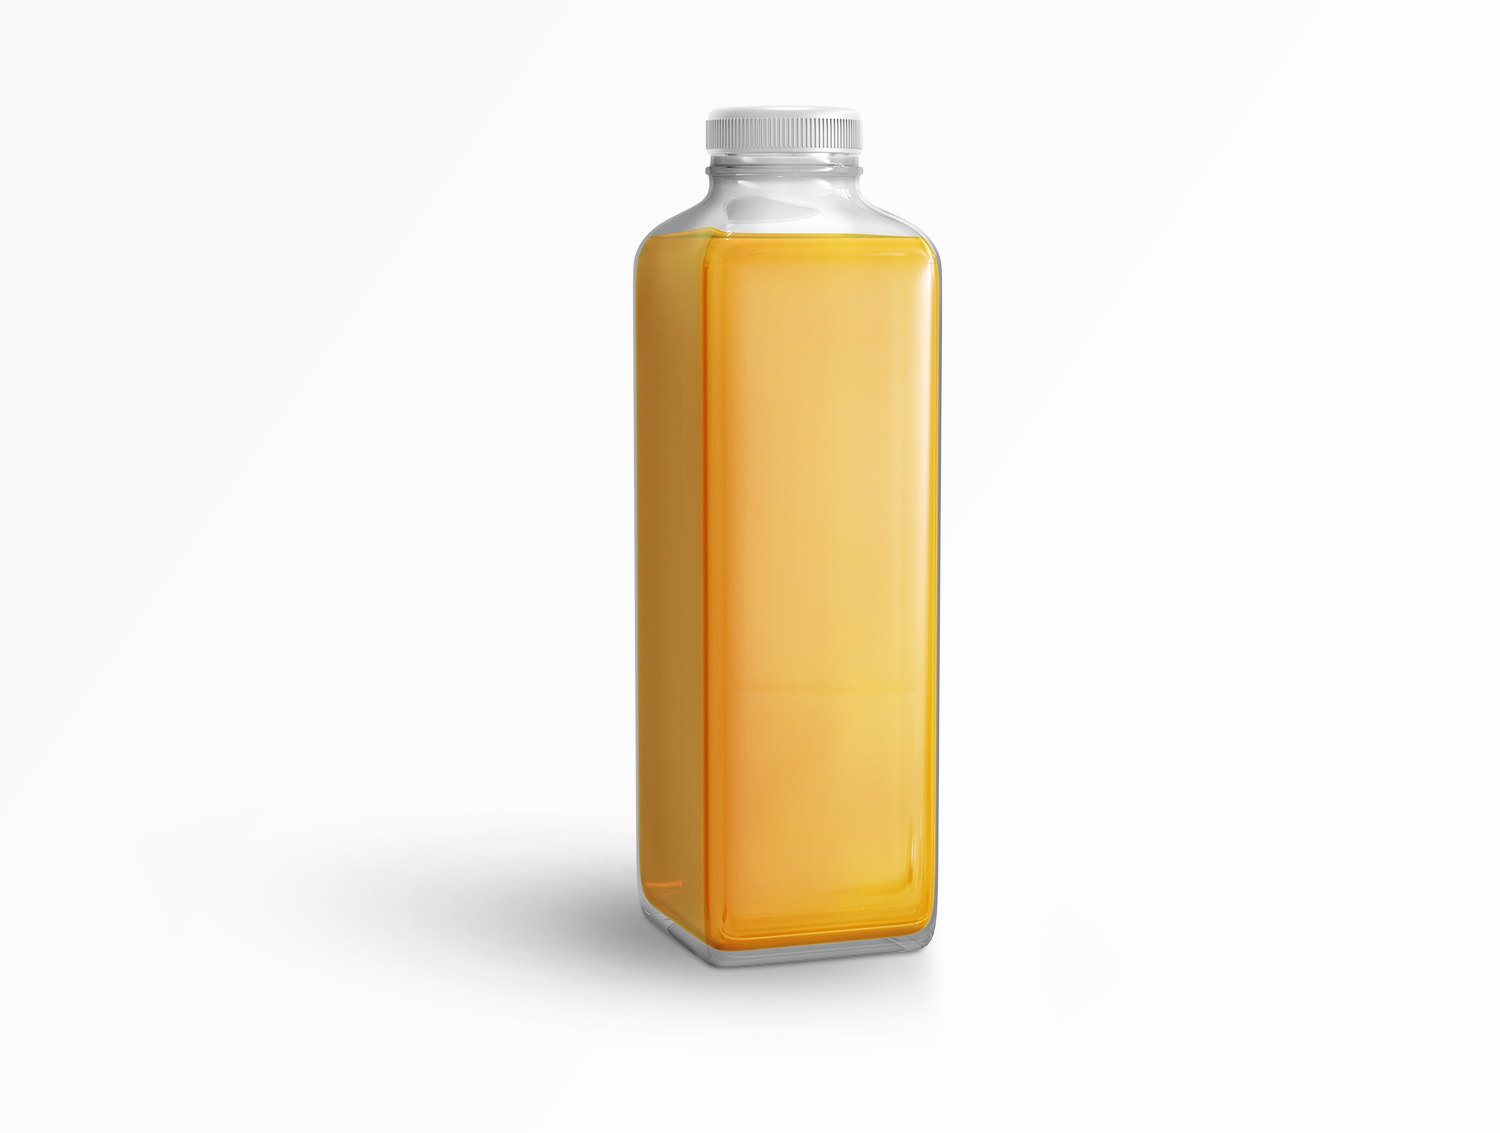 Free Glass Bottle Juice Mockup (PSD)